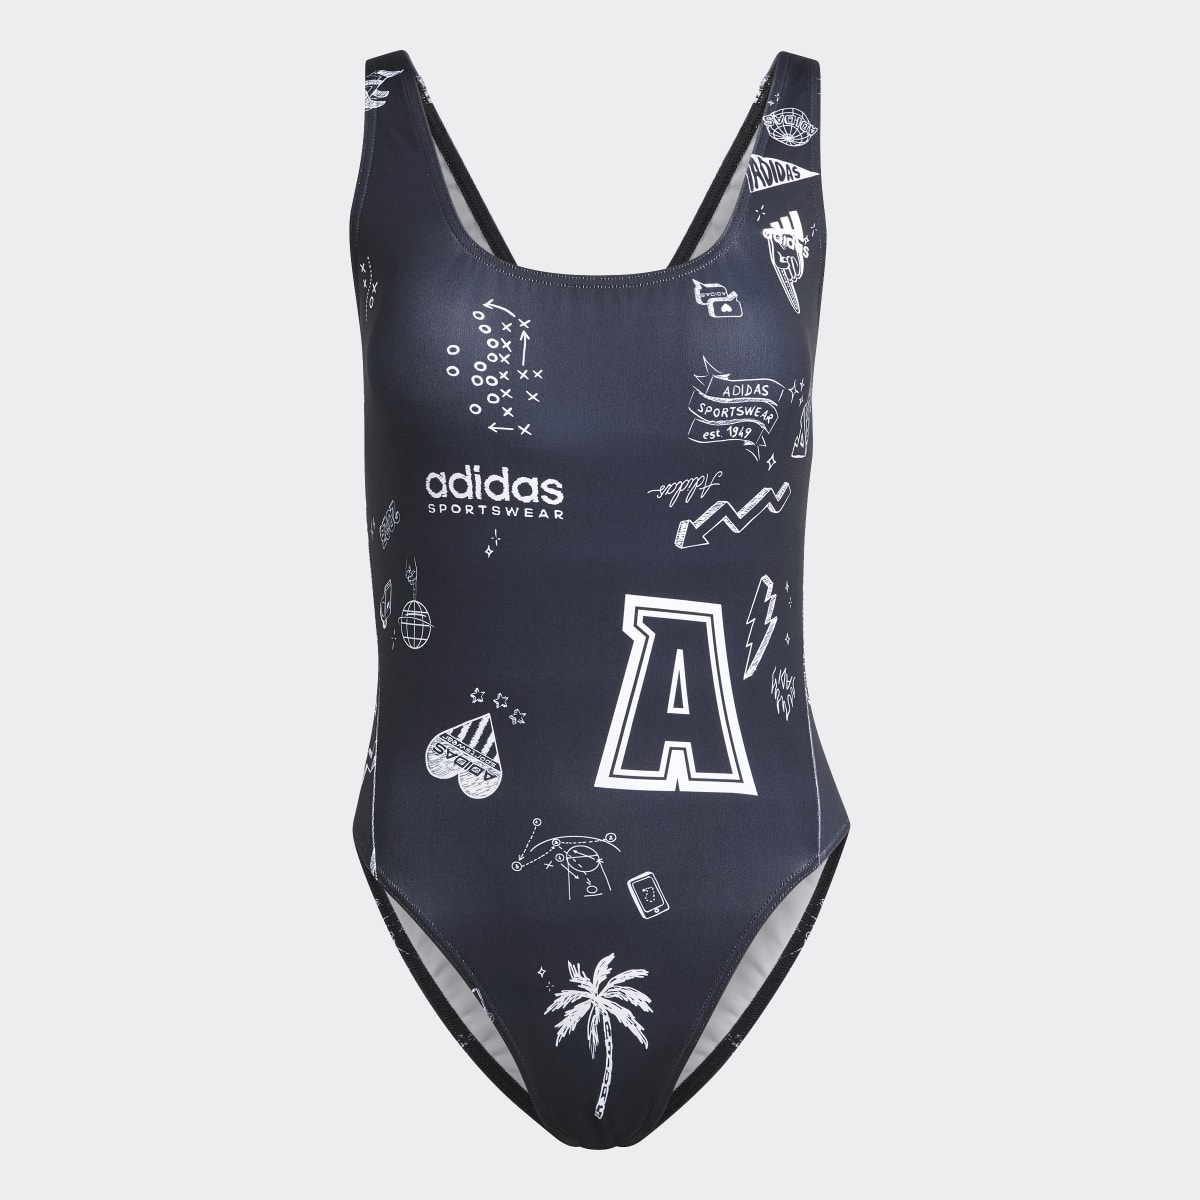 Adidas Brand Love Franchise Swimsuit. 6